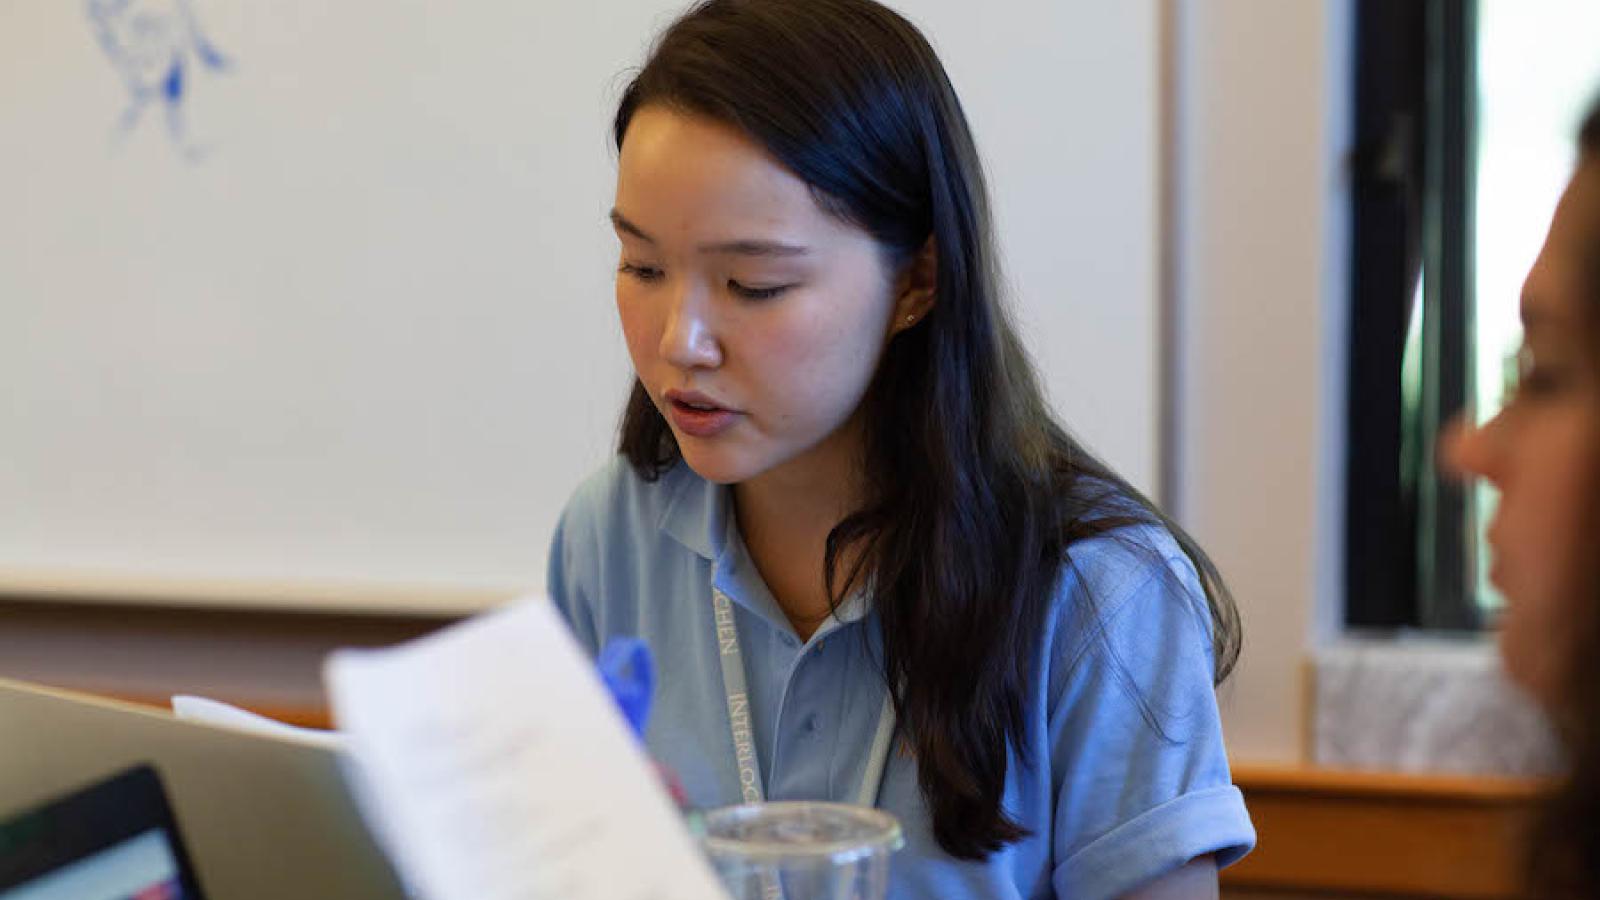 Screenwriting student reads her work aloud at interlochen arts camp